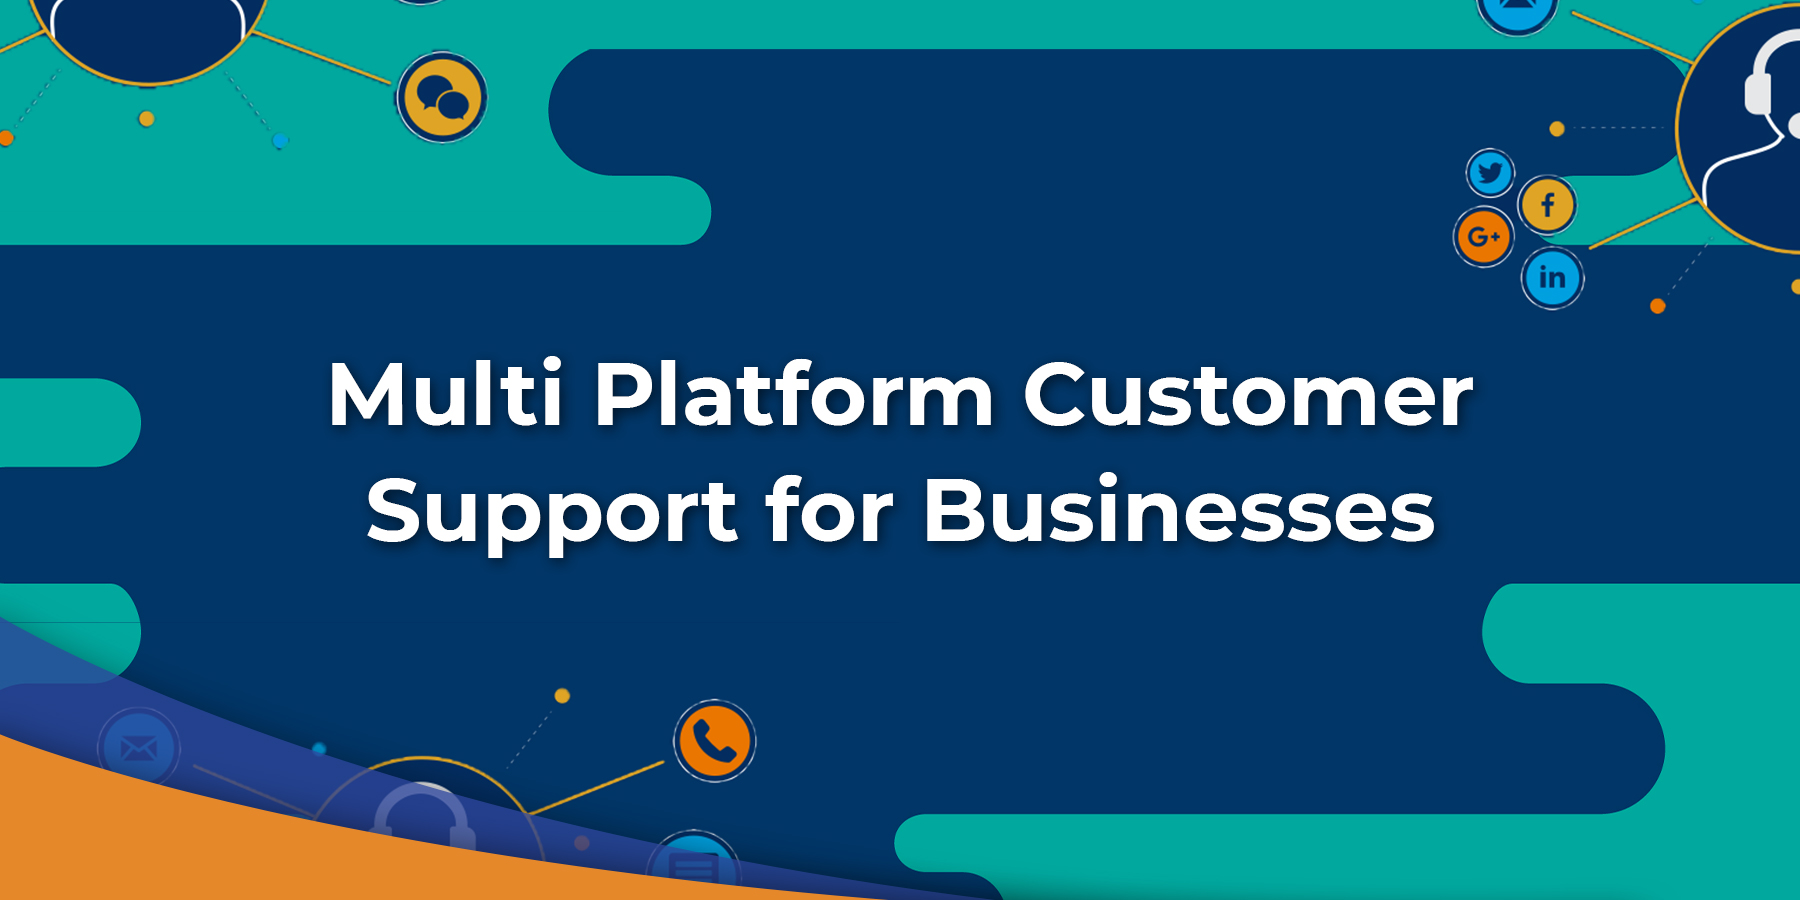 Multi Platform Customer Support for Businesses